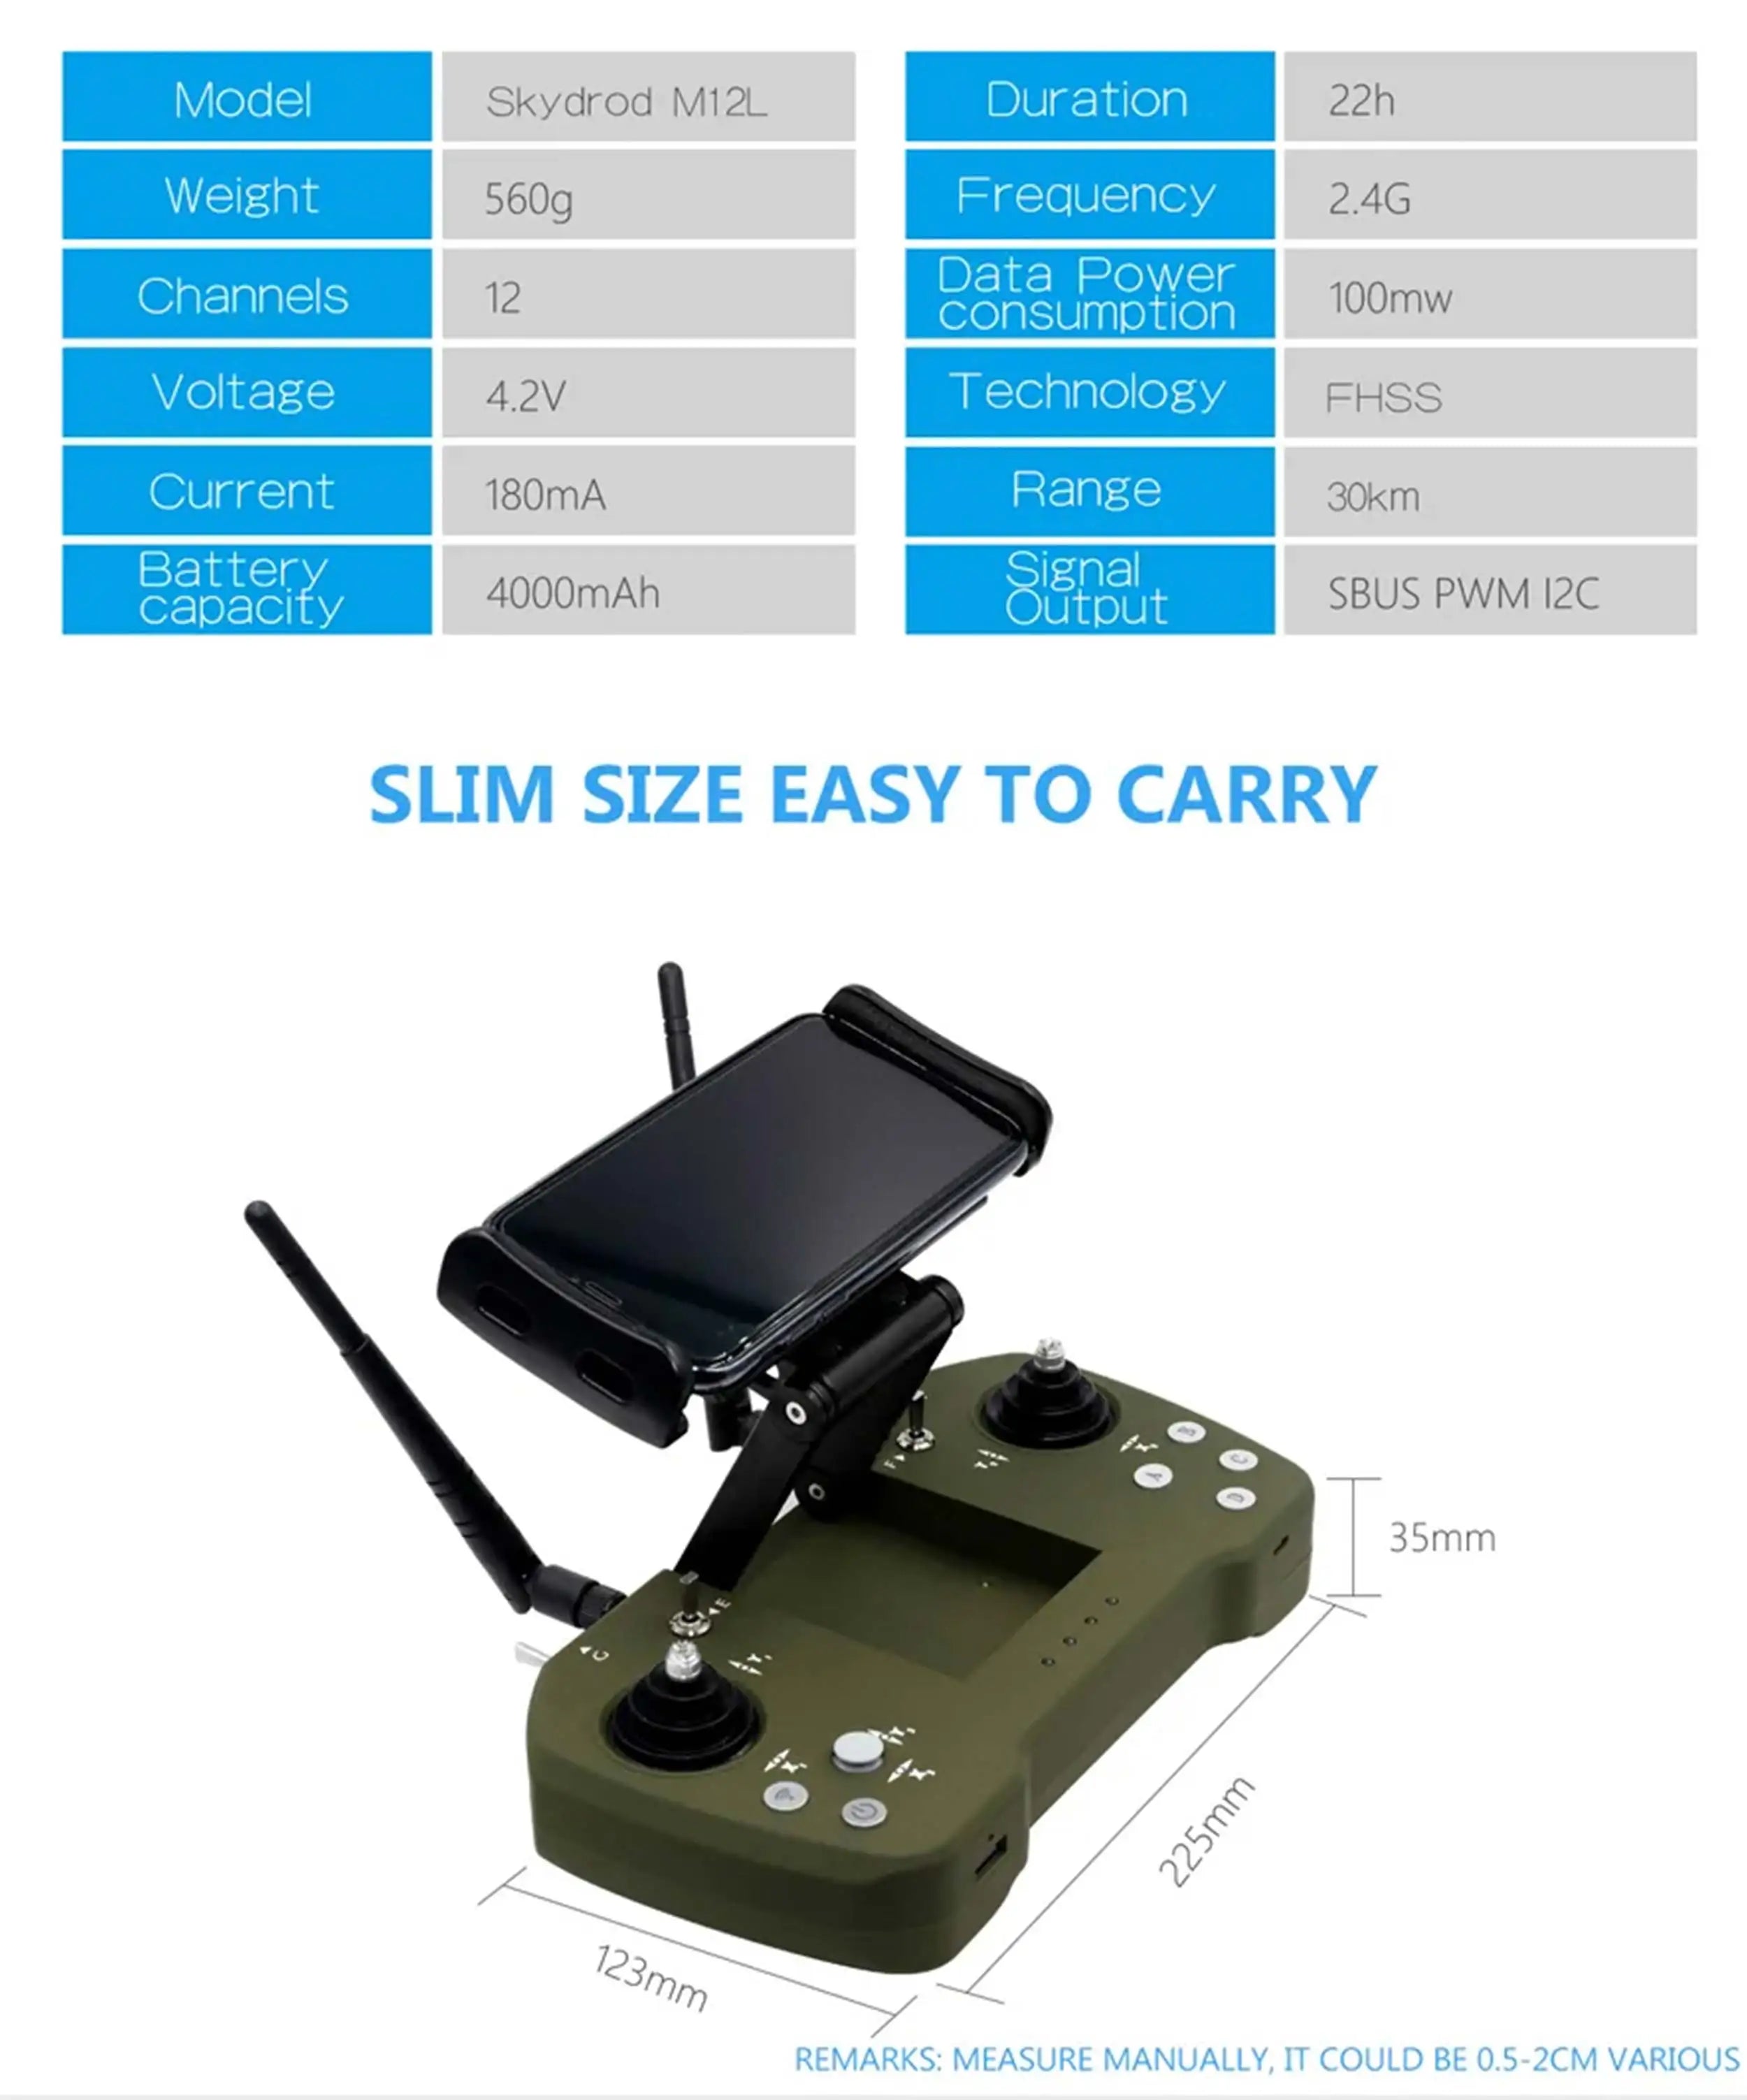 Skydroid M12L, Professional UAV digital radio system with 30-60km range, 22 hour battery life.